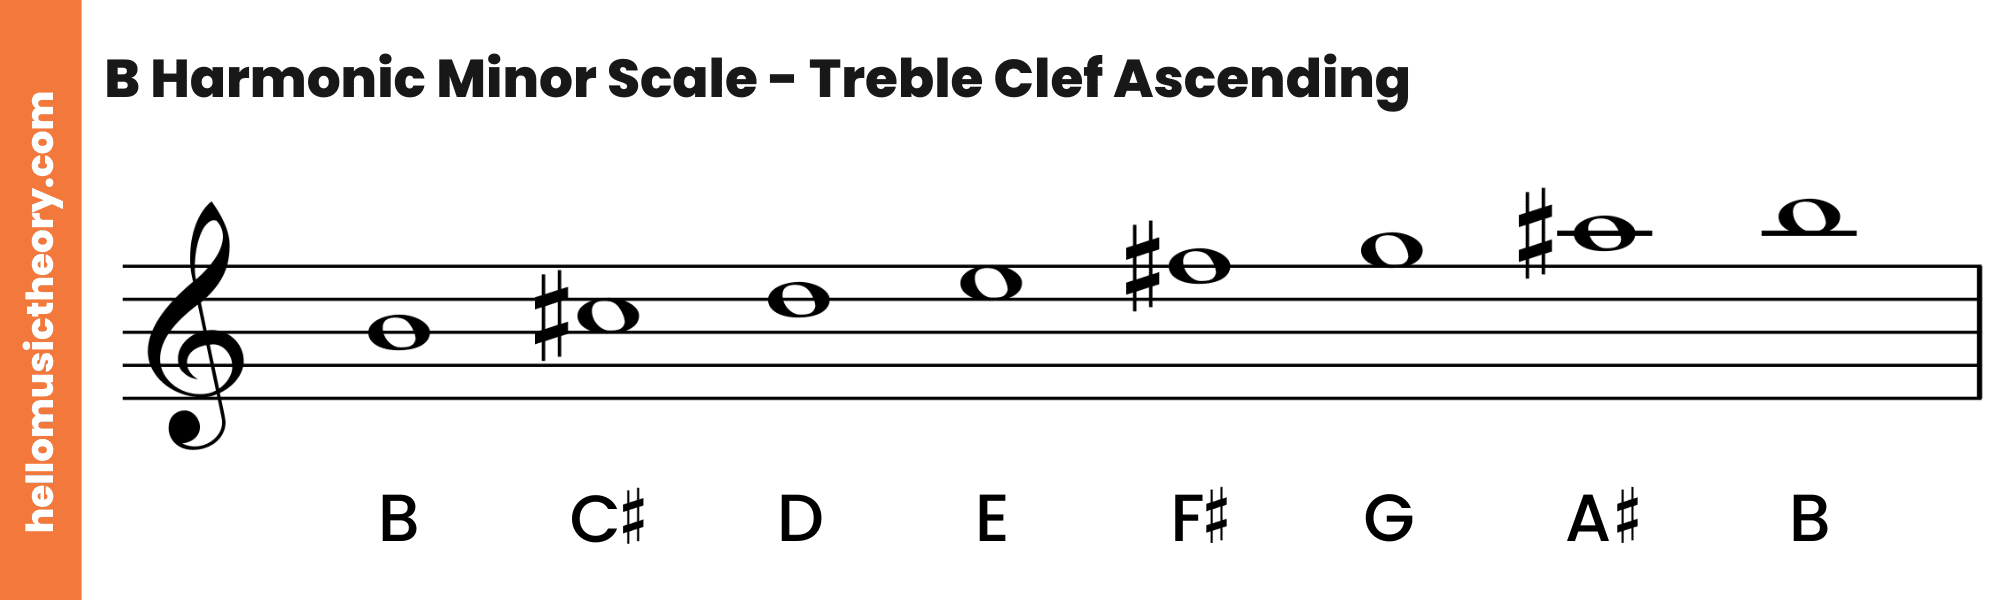 B Harmonic Minor Scale Treble Clef Ascending